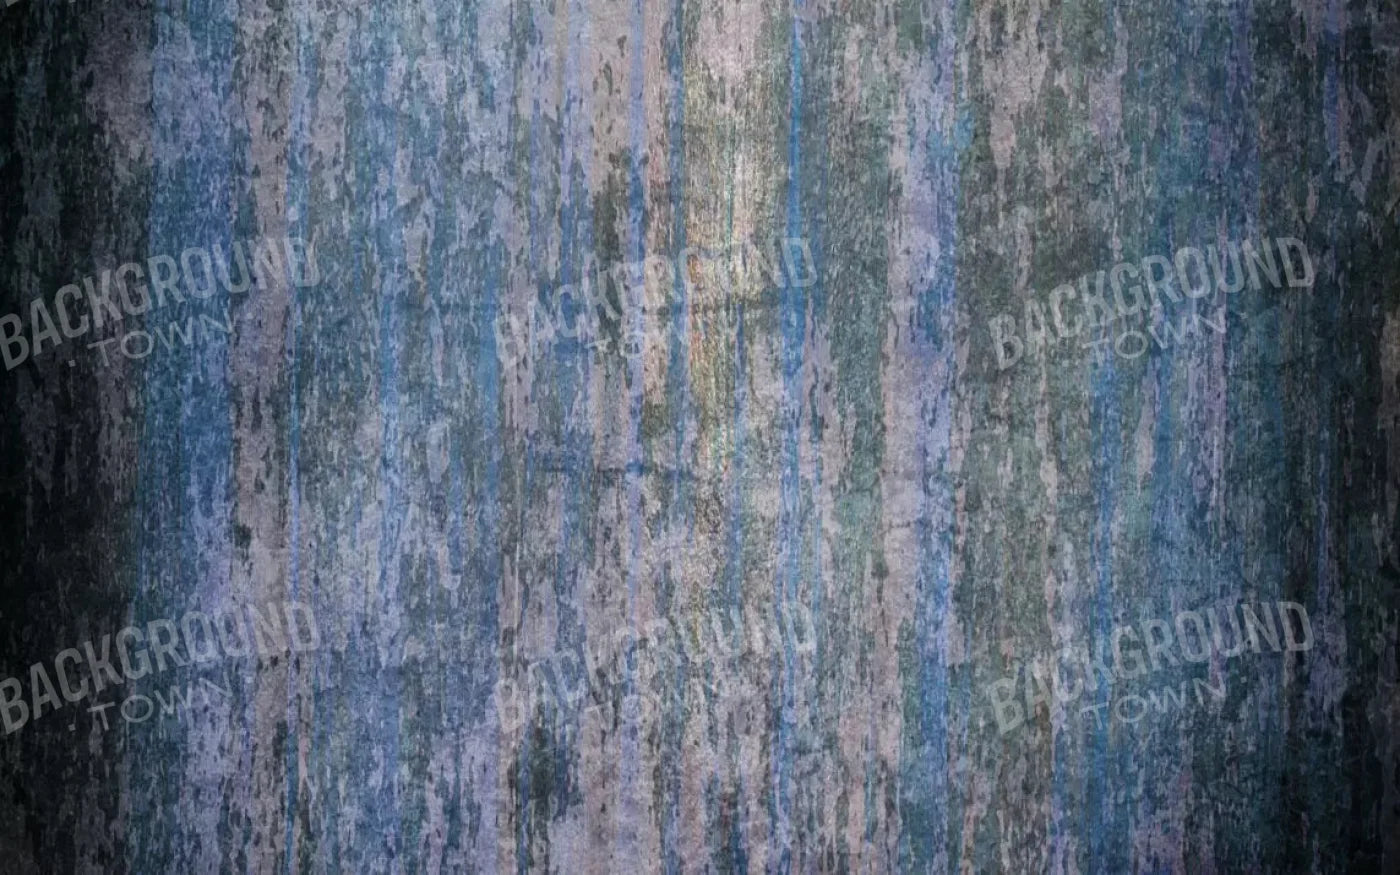 Blueblood 14X9 Ultracloth ( 168 X 108 Inch ) Backdrop